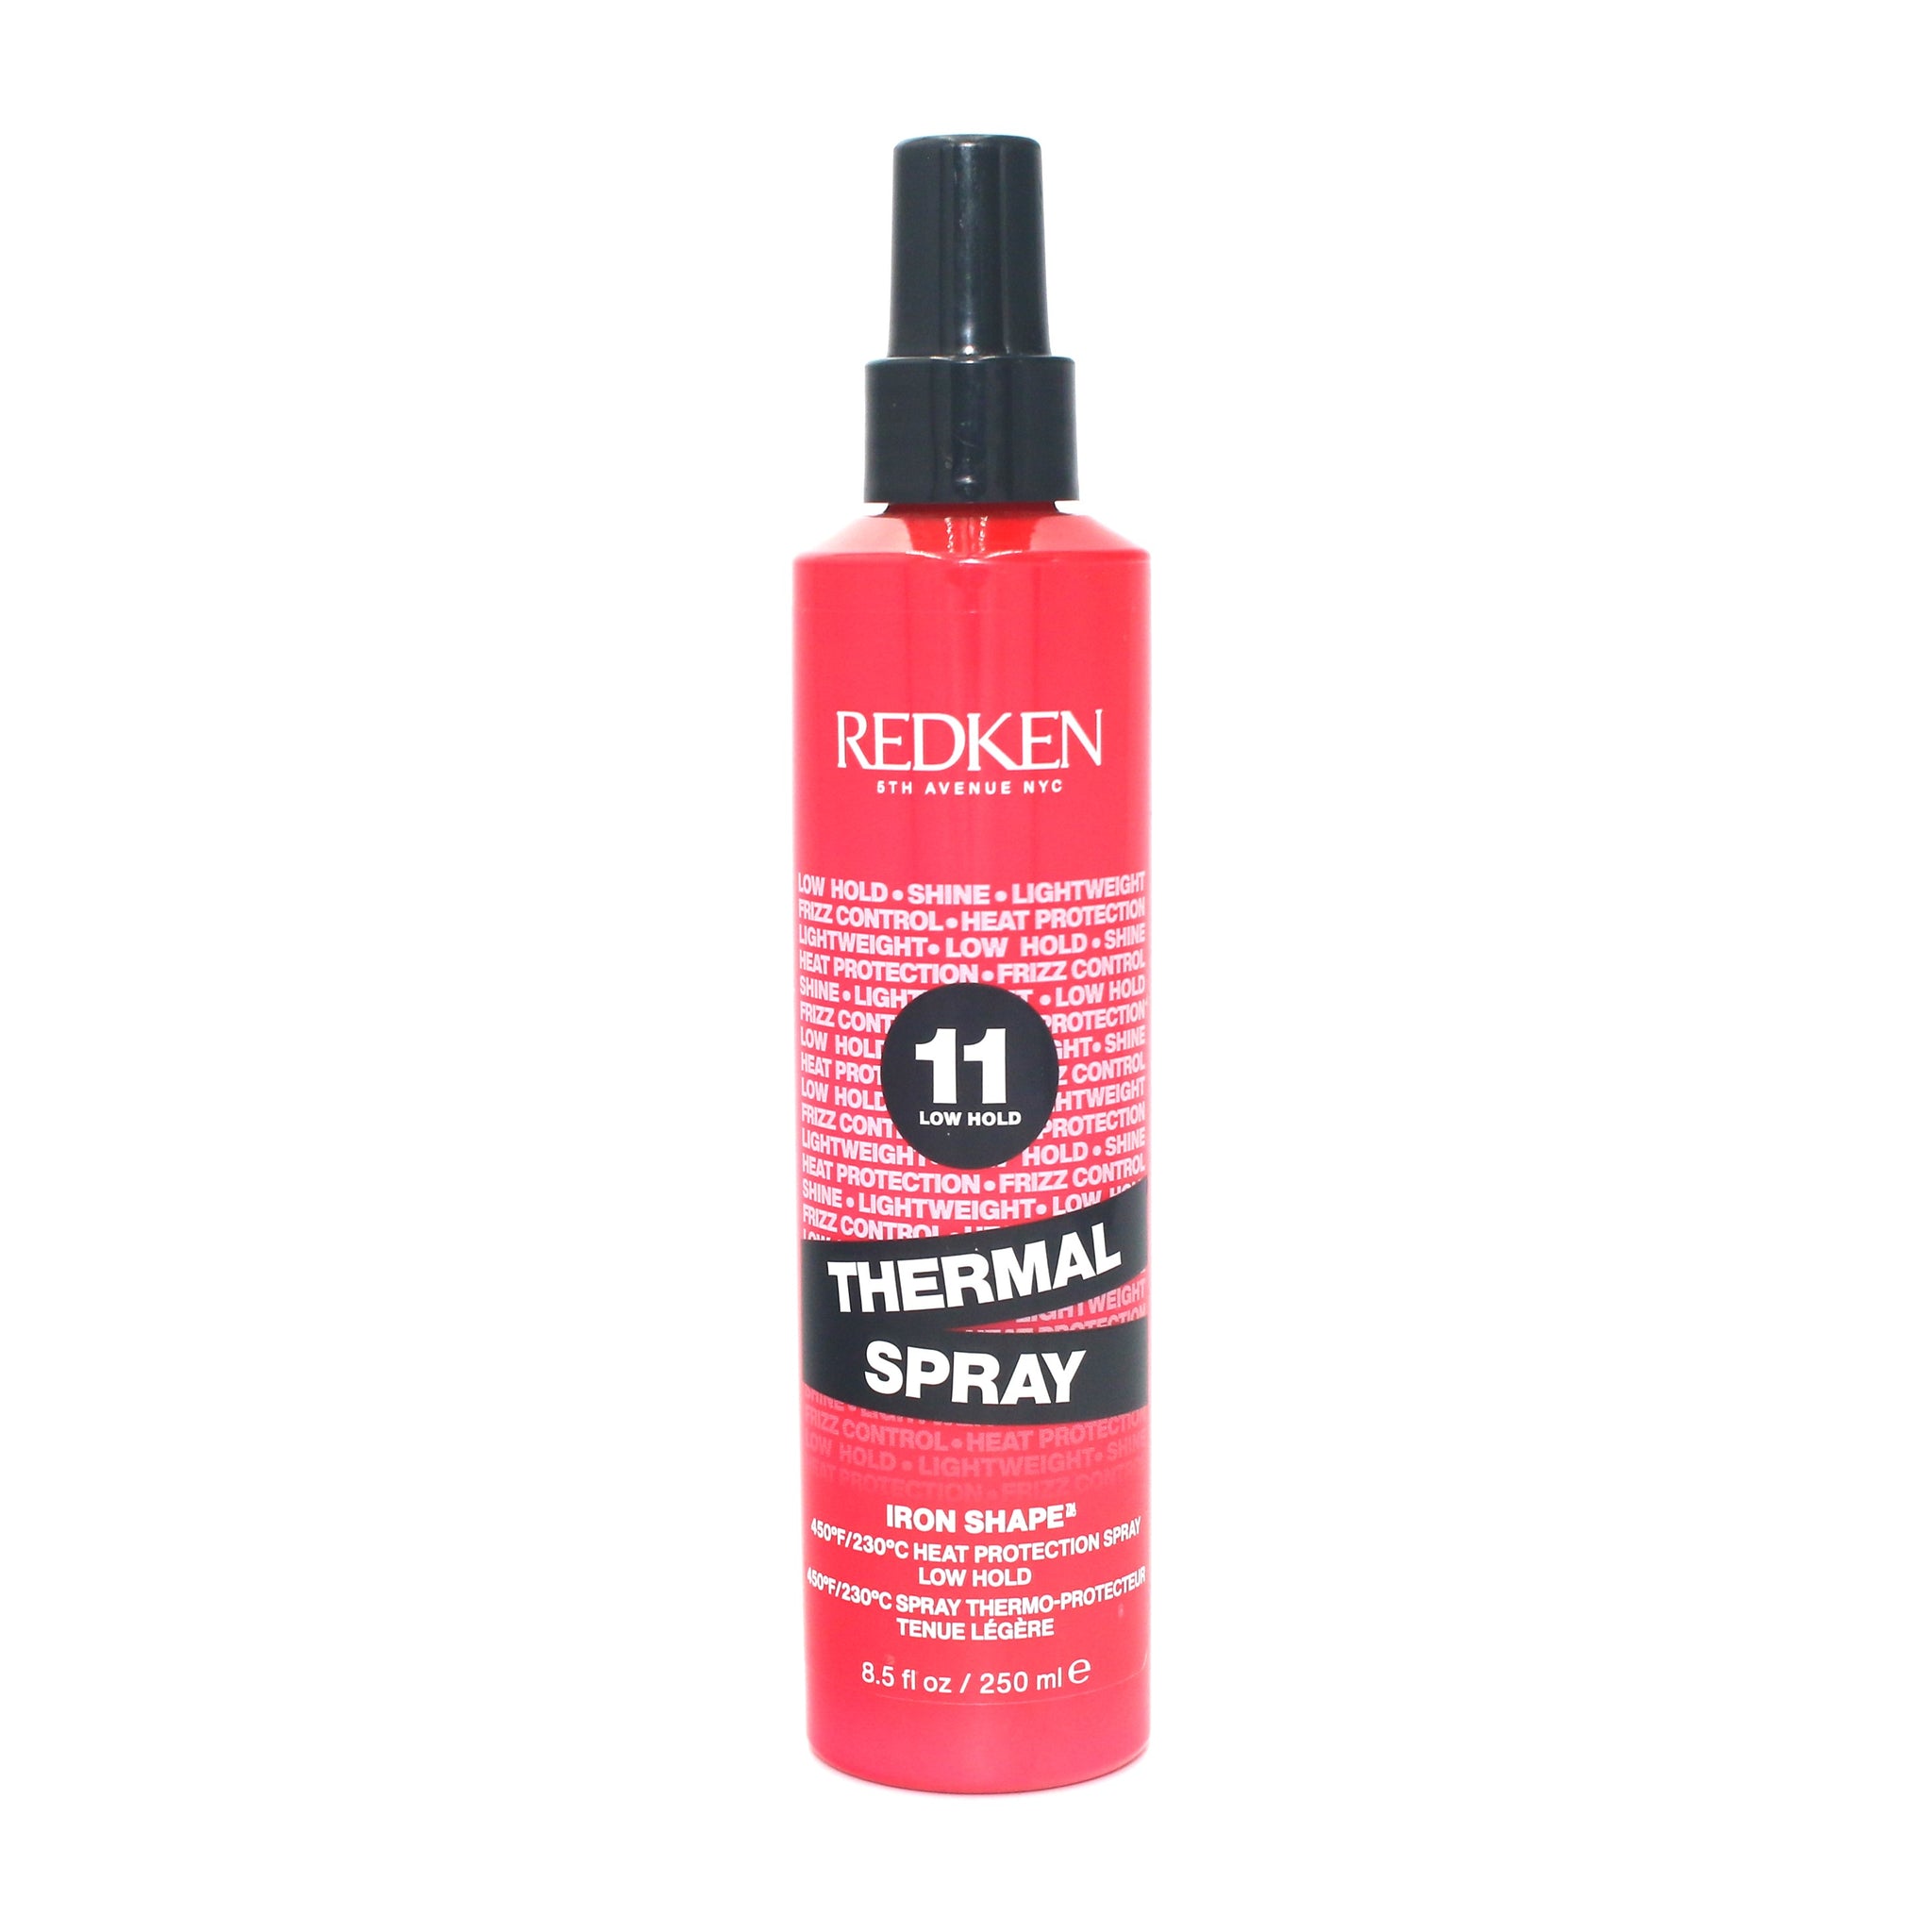 Redken Thermal Spray 11 Iron Shape Heat Protection Spray 8.5 oz